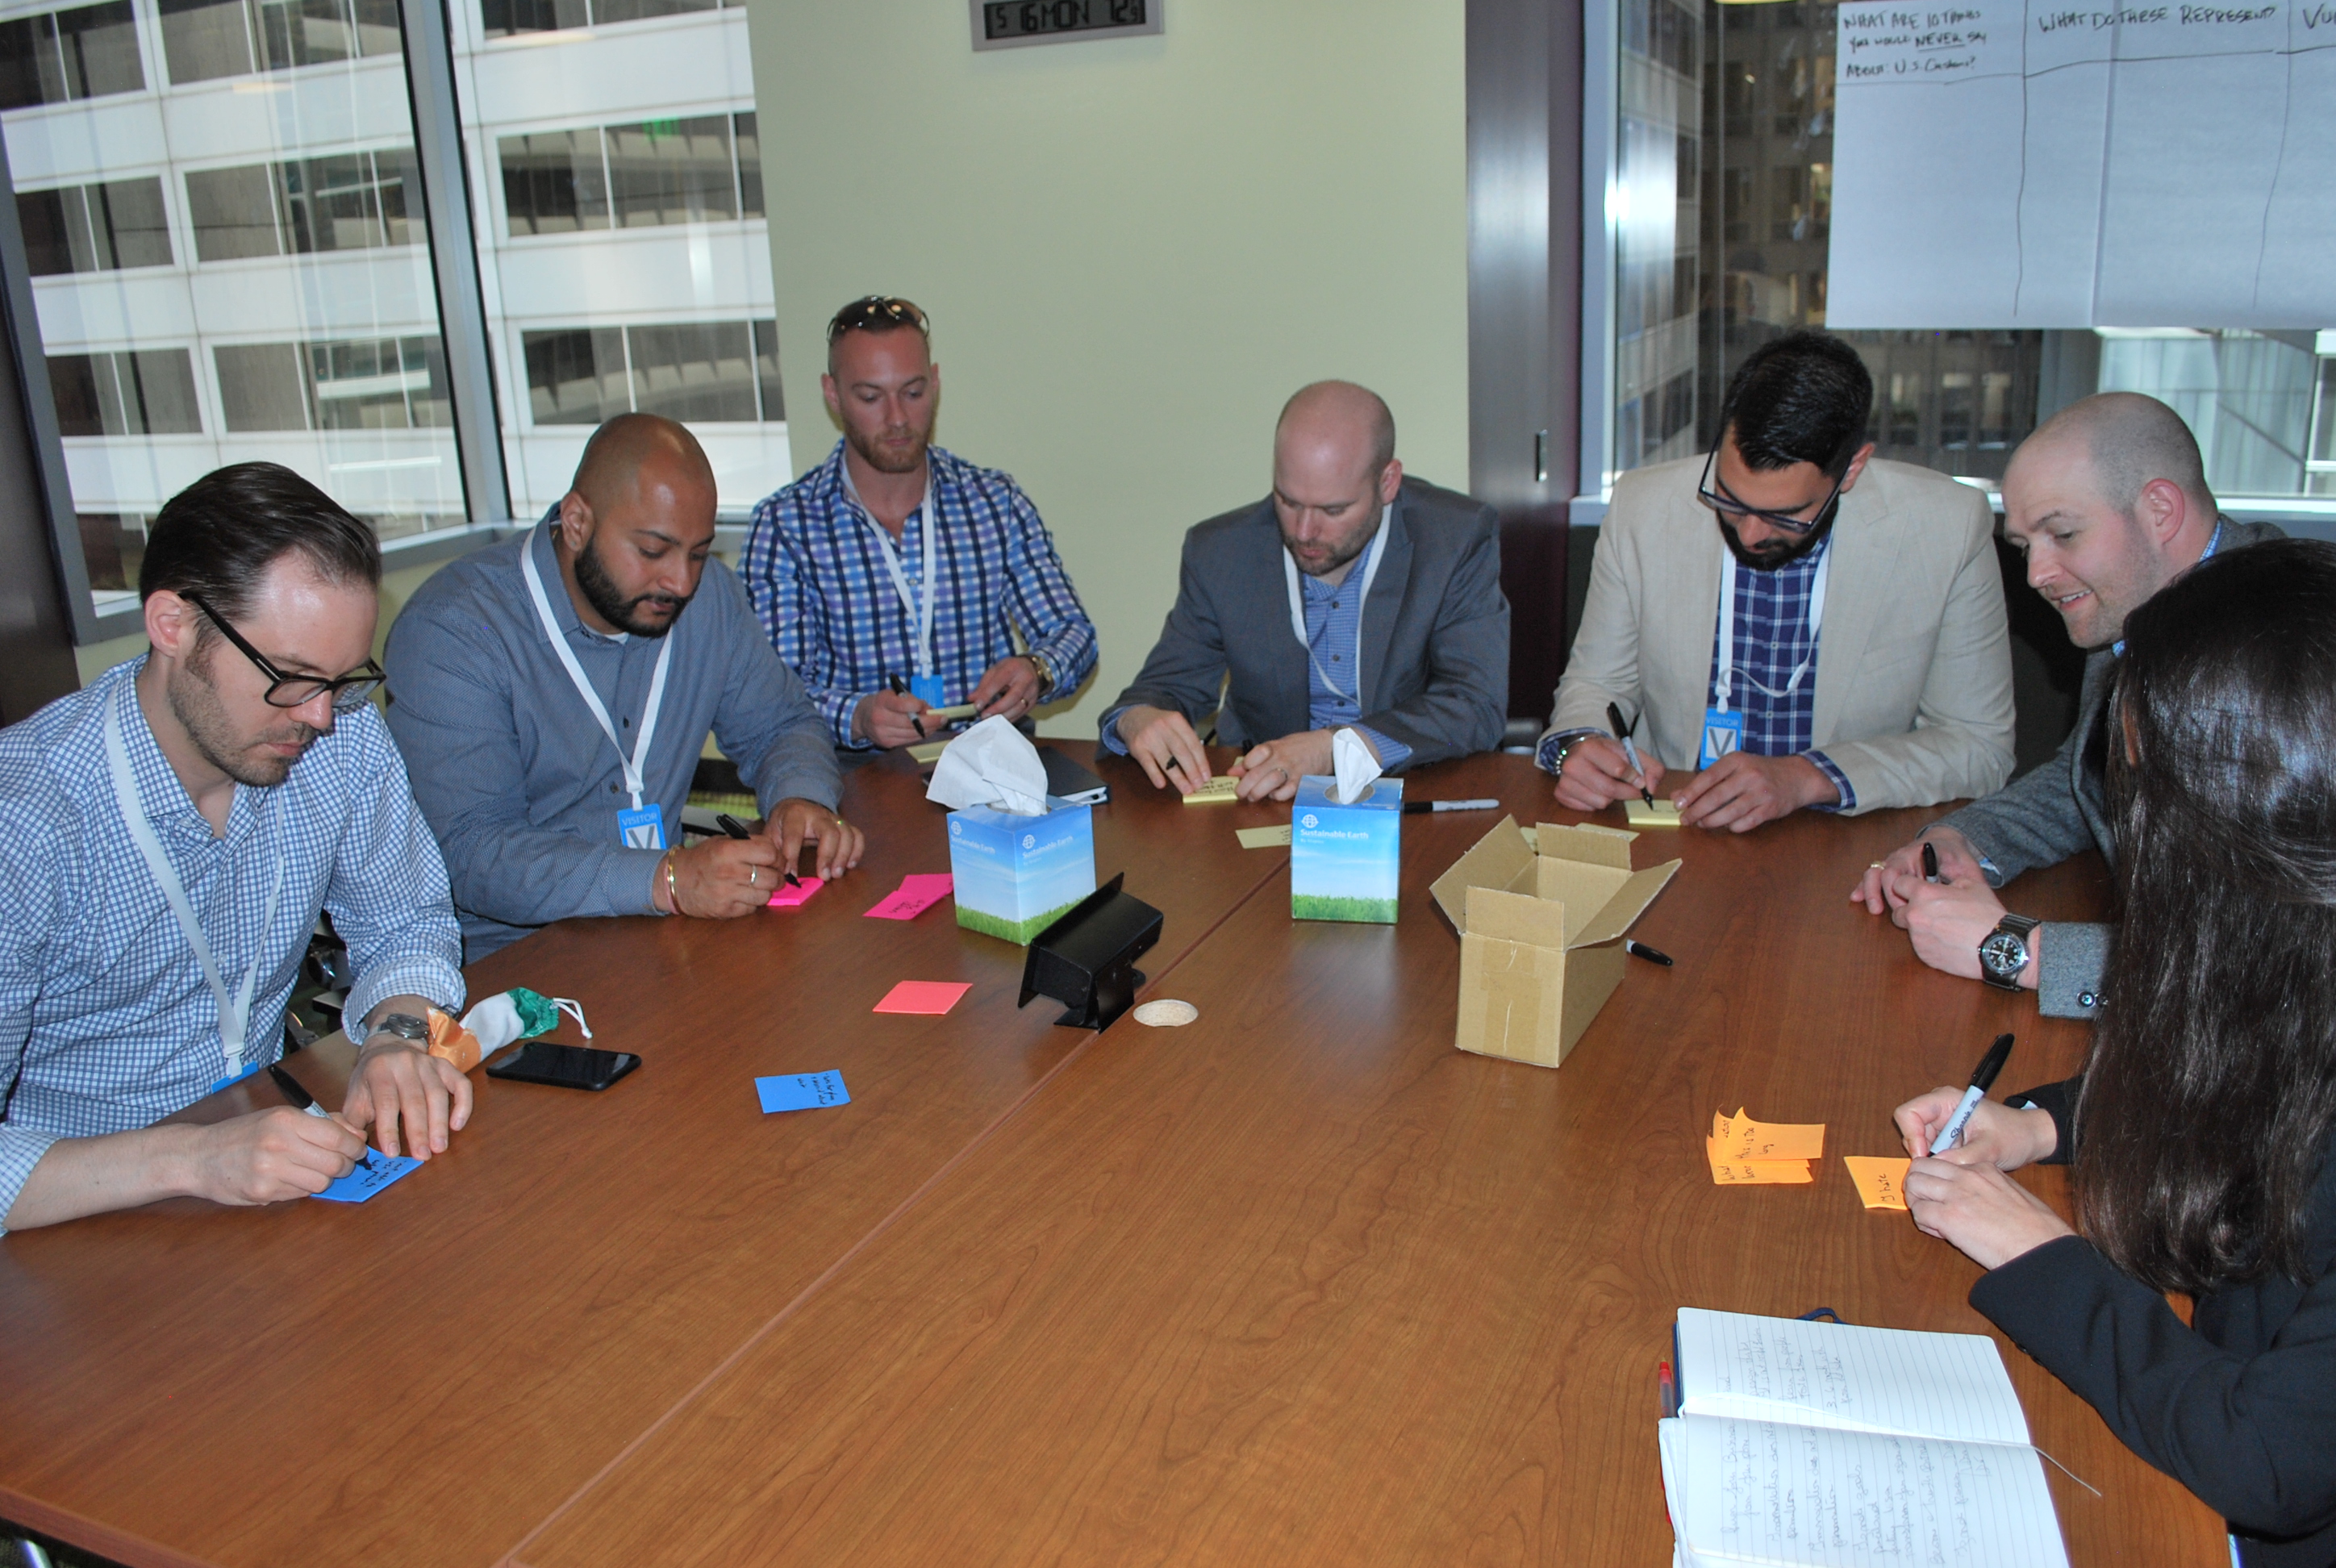 Teams of Executive MBAs brainstorming